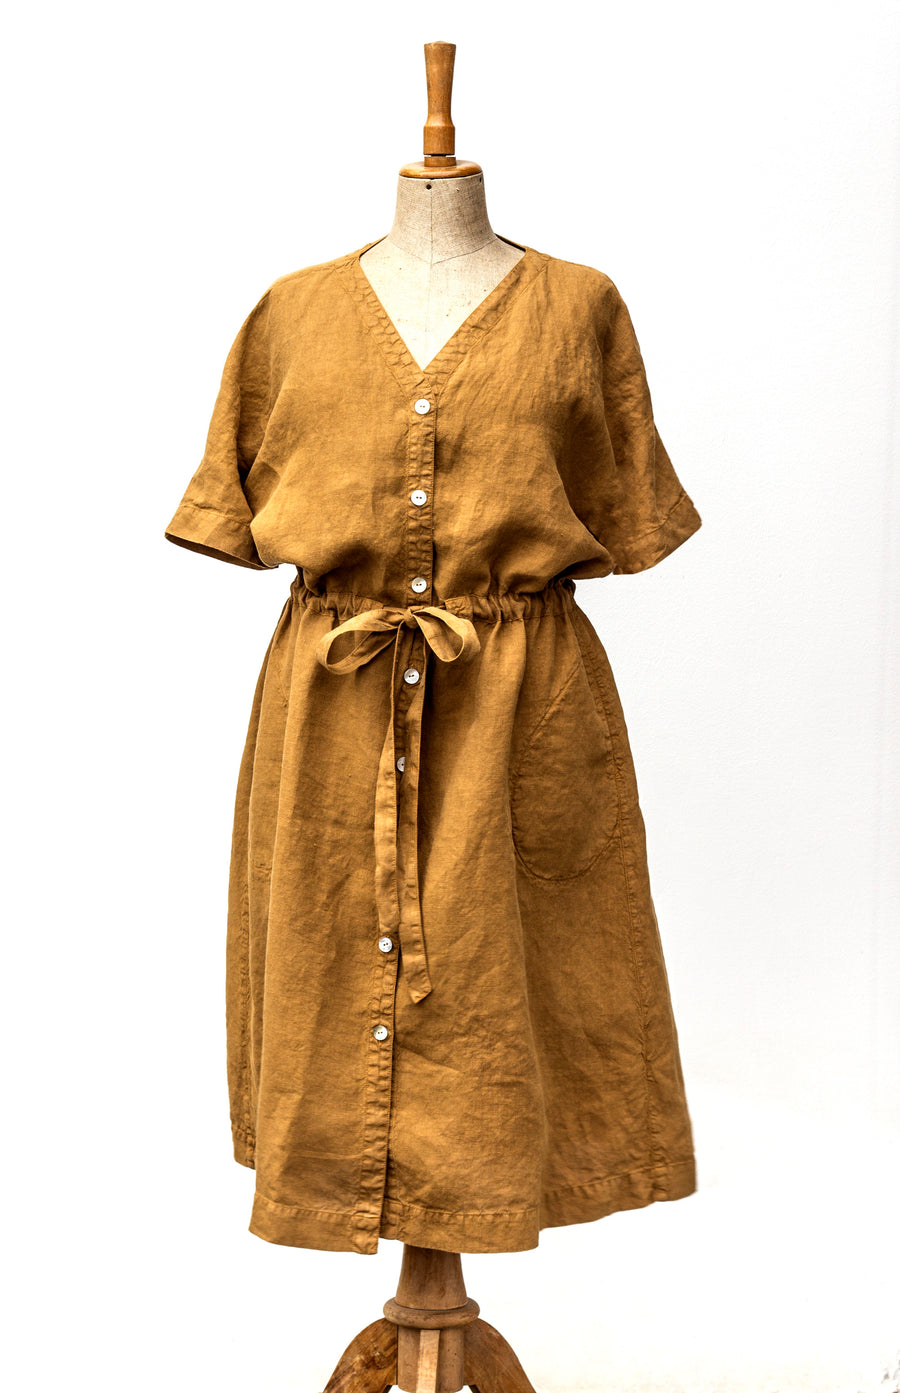 Shift dress in Wood Thrush shade / PREORDER